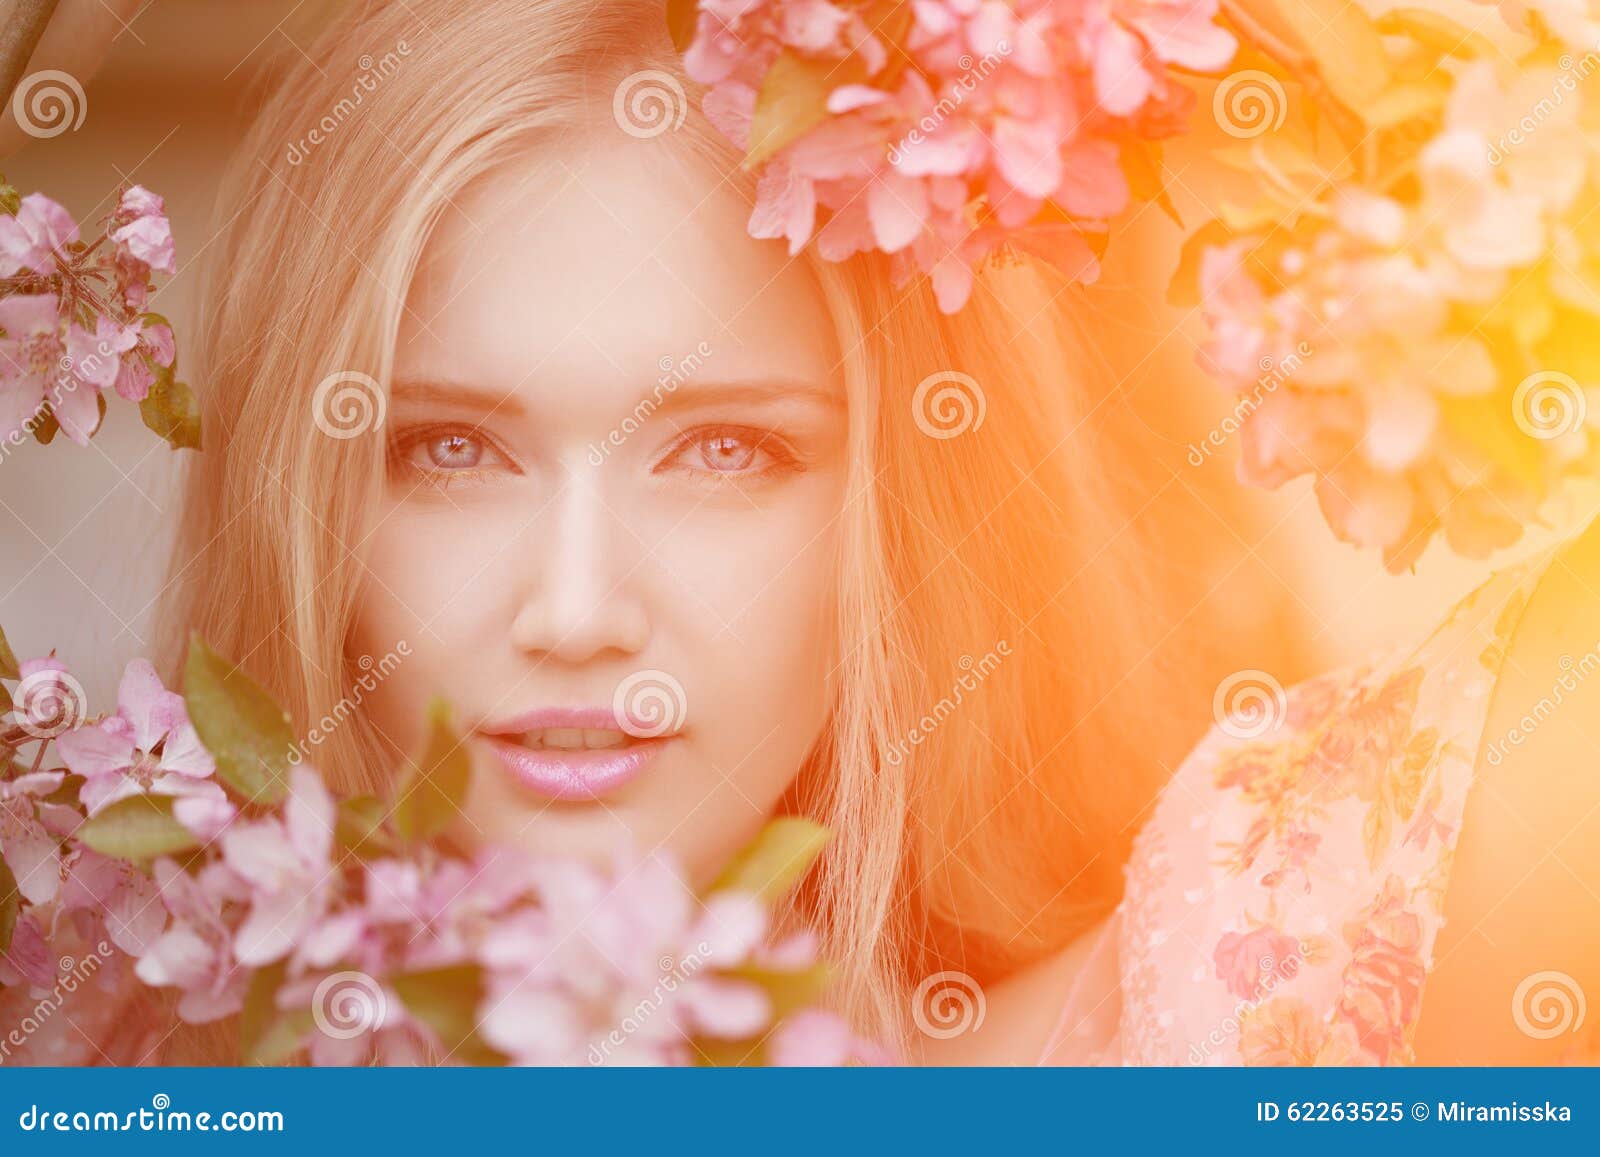 young spring fashion woman in spring garden. springtime. trendy